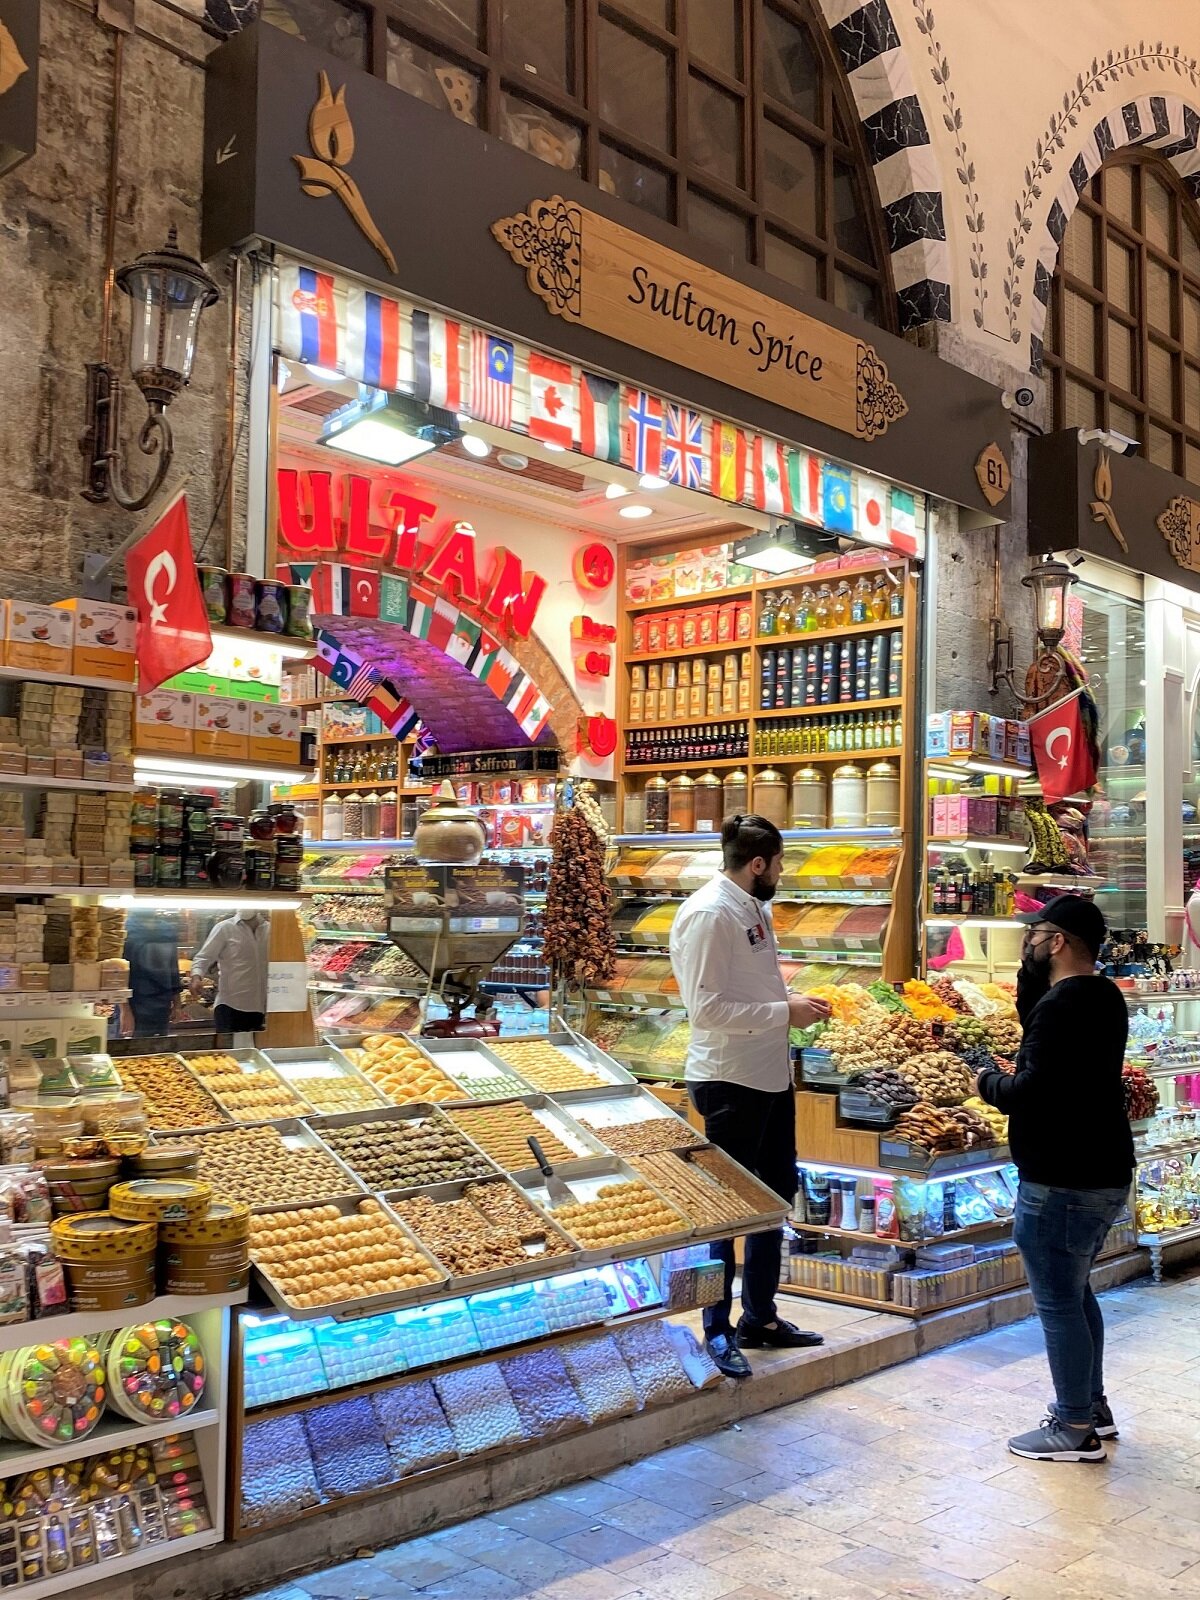 Spice Bazaar (Misir Carsisi – “Egyptian Market”) in Istanbul - Turkey